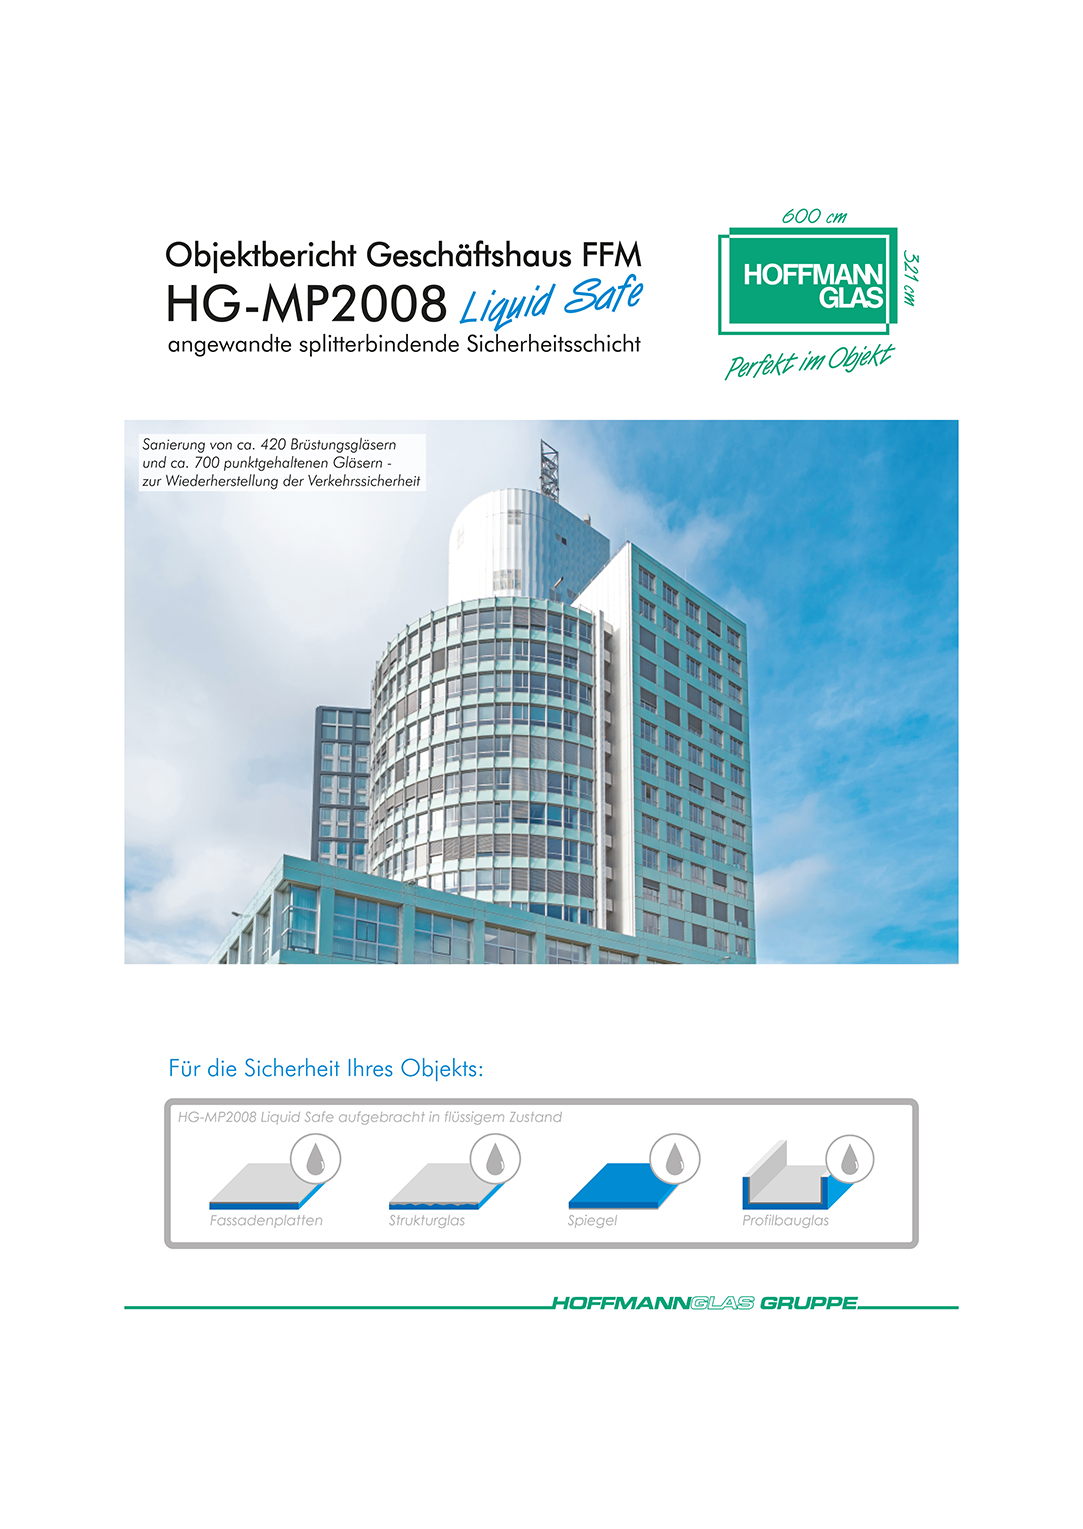 Objektbericht Geschaeftshaus FFM HG MP2008 20151104 hover